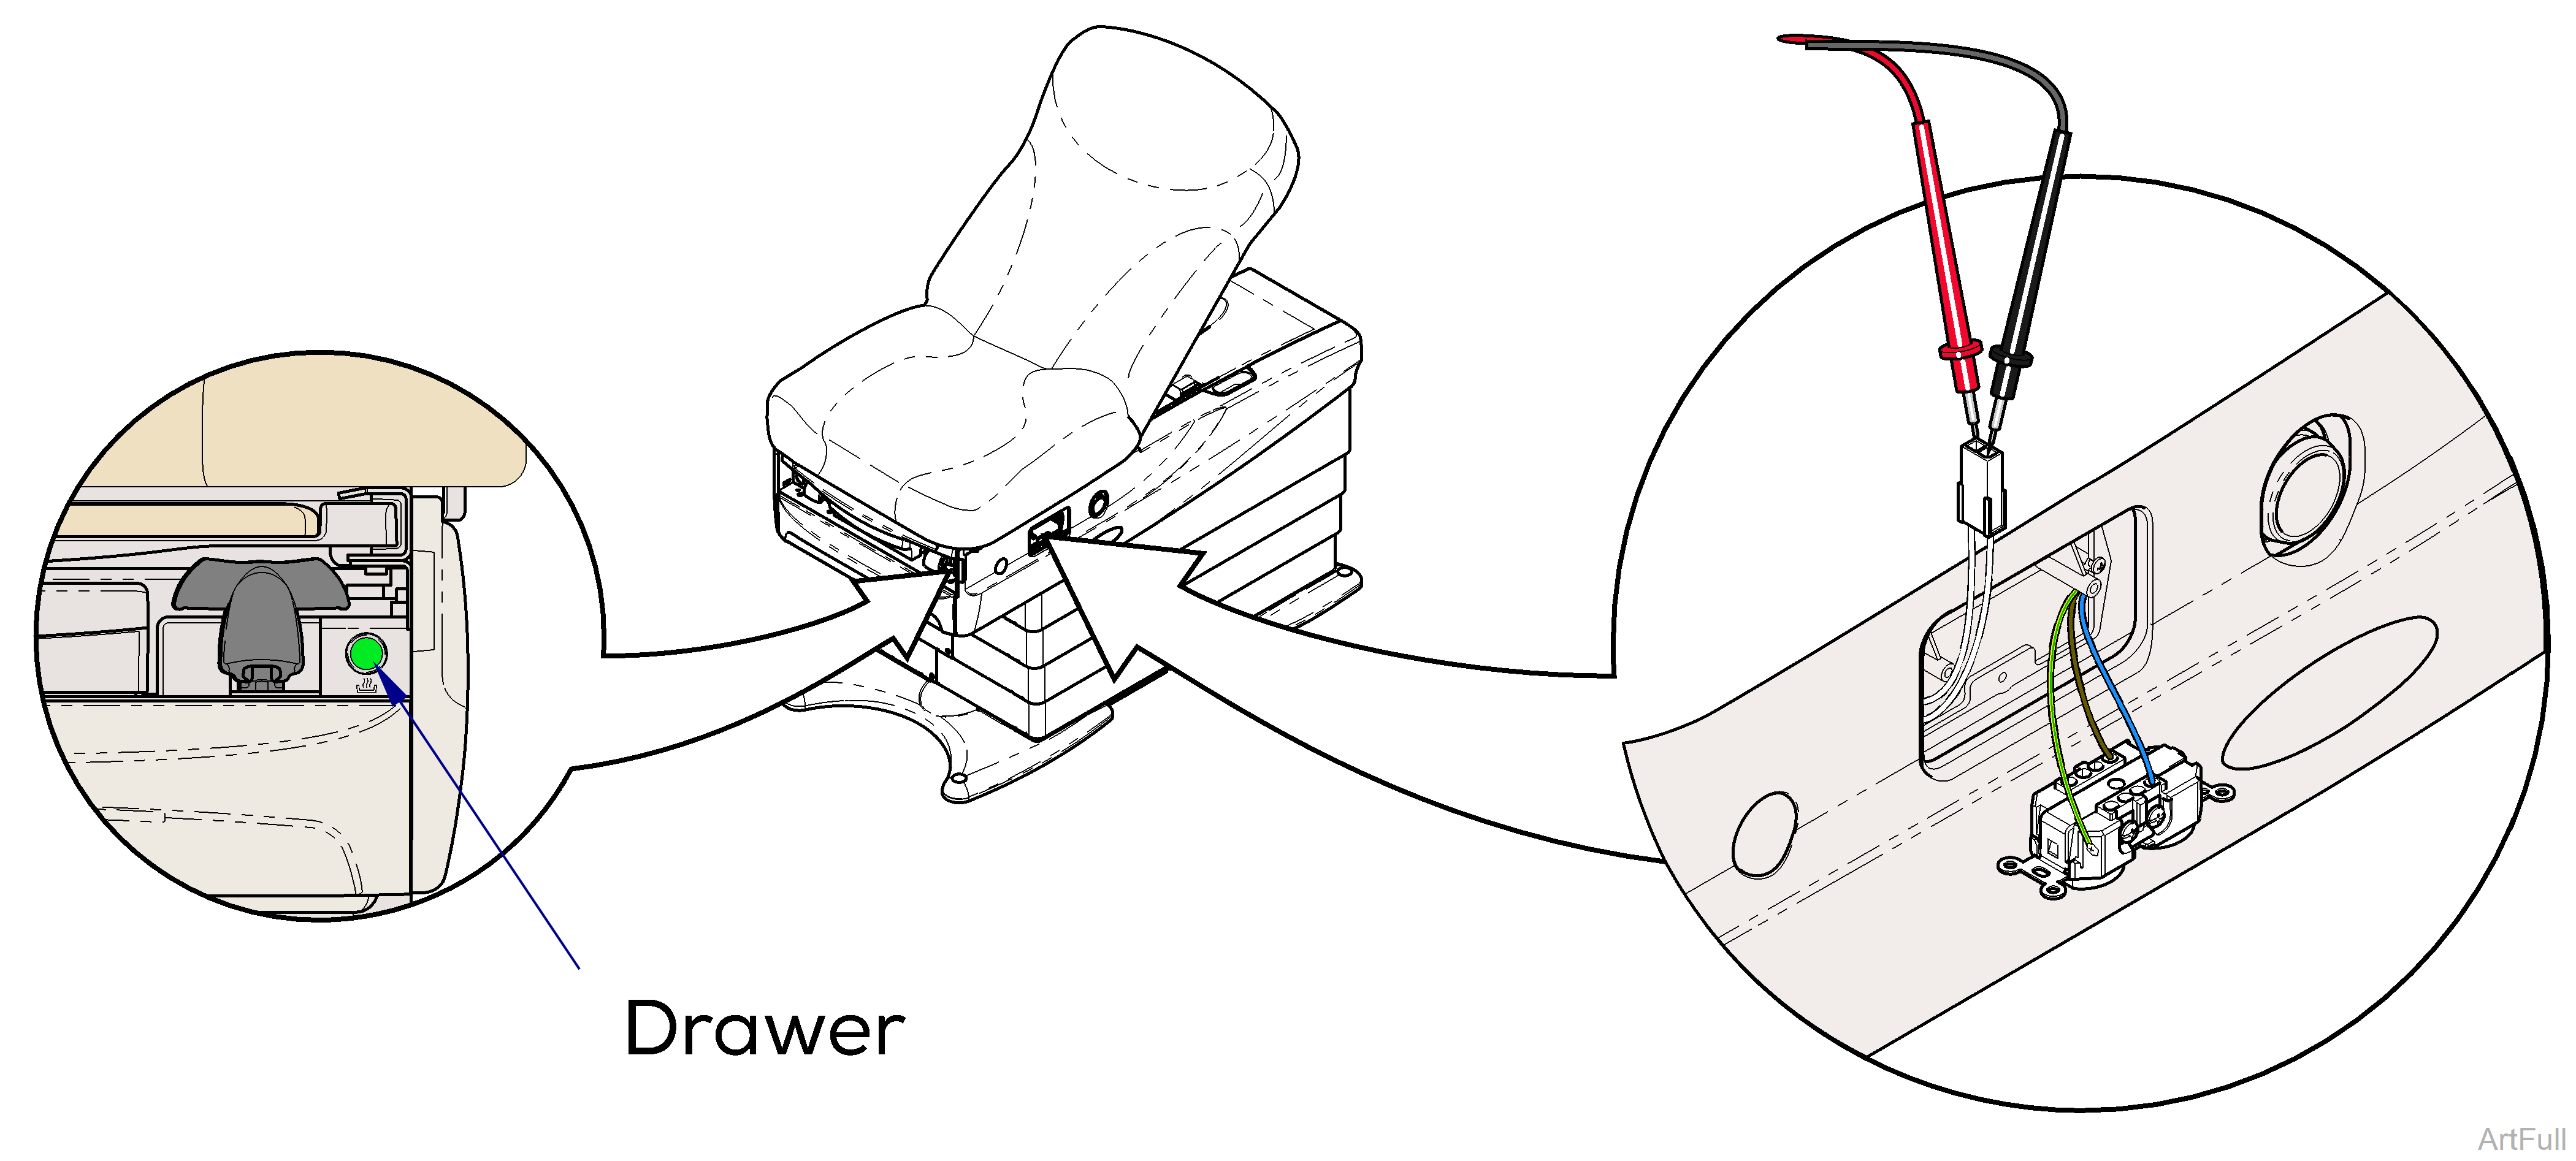 626 Chair Drawer Heater Switch Test